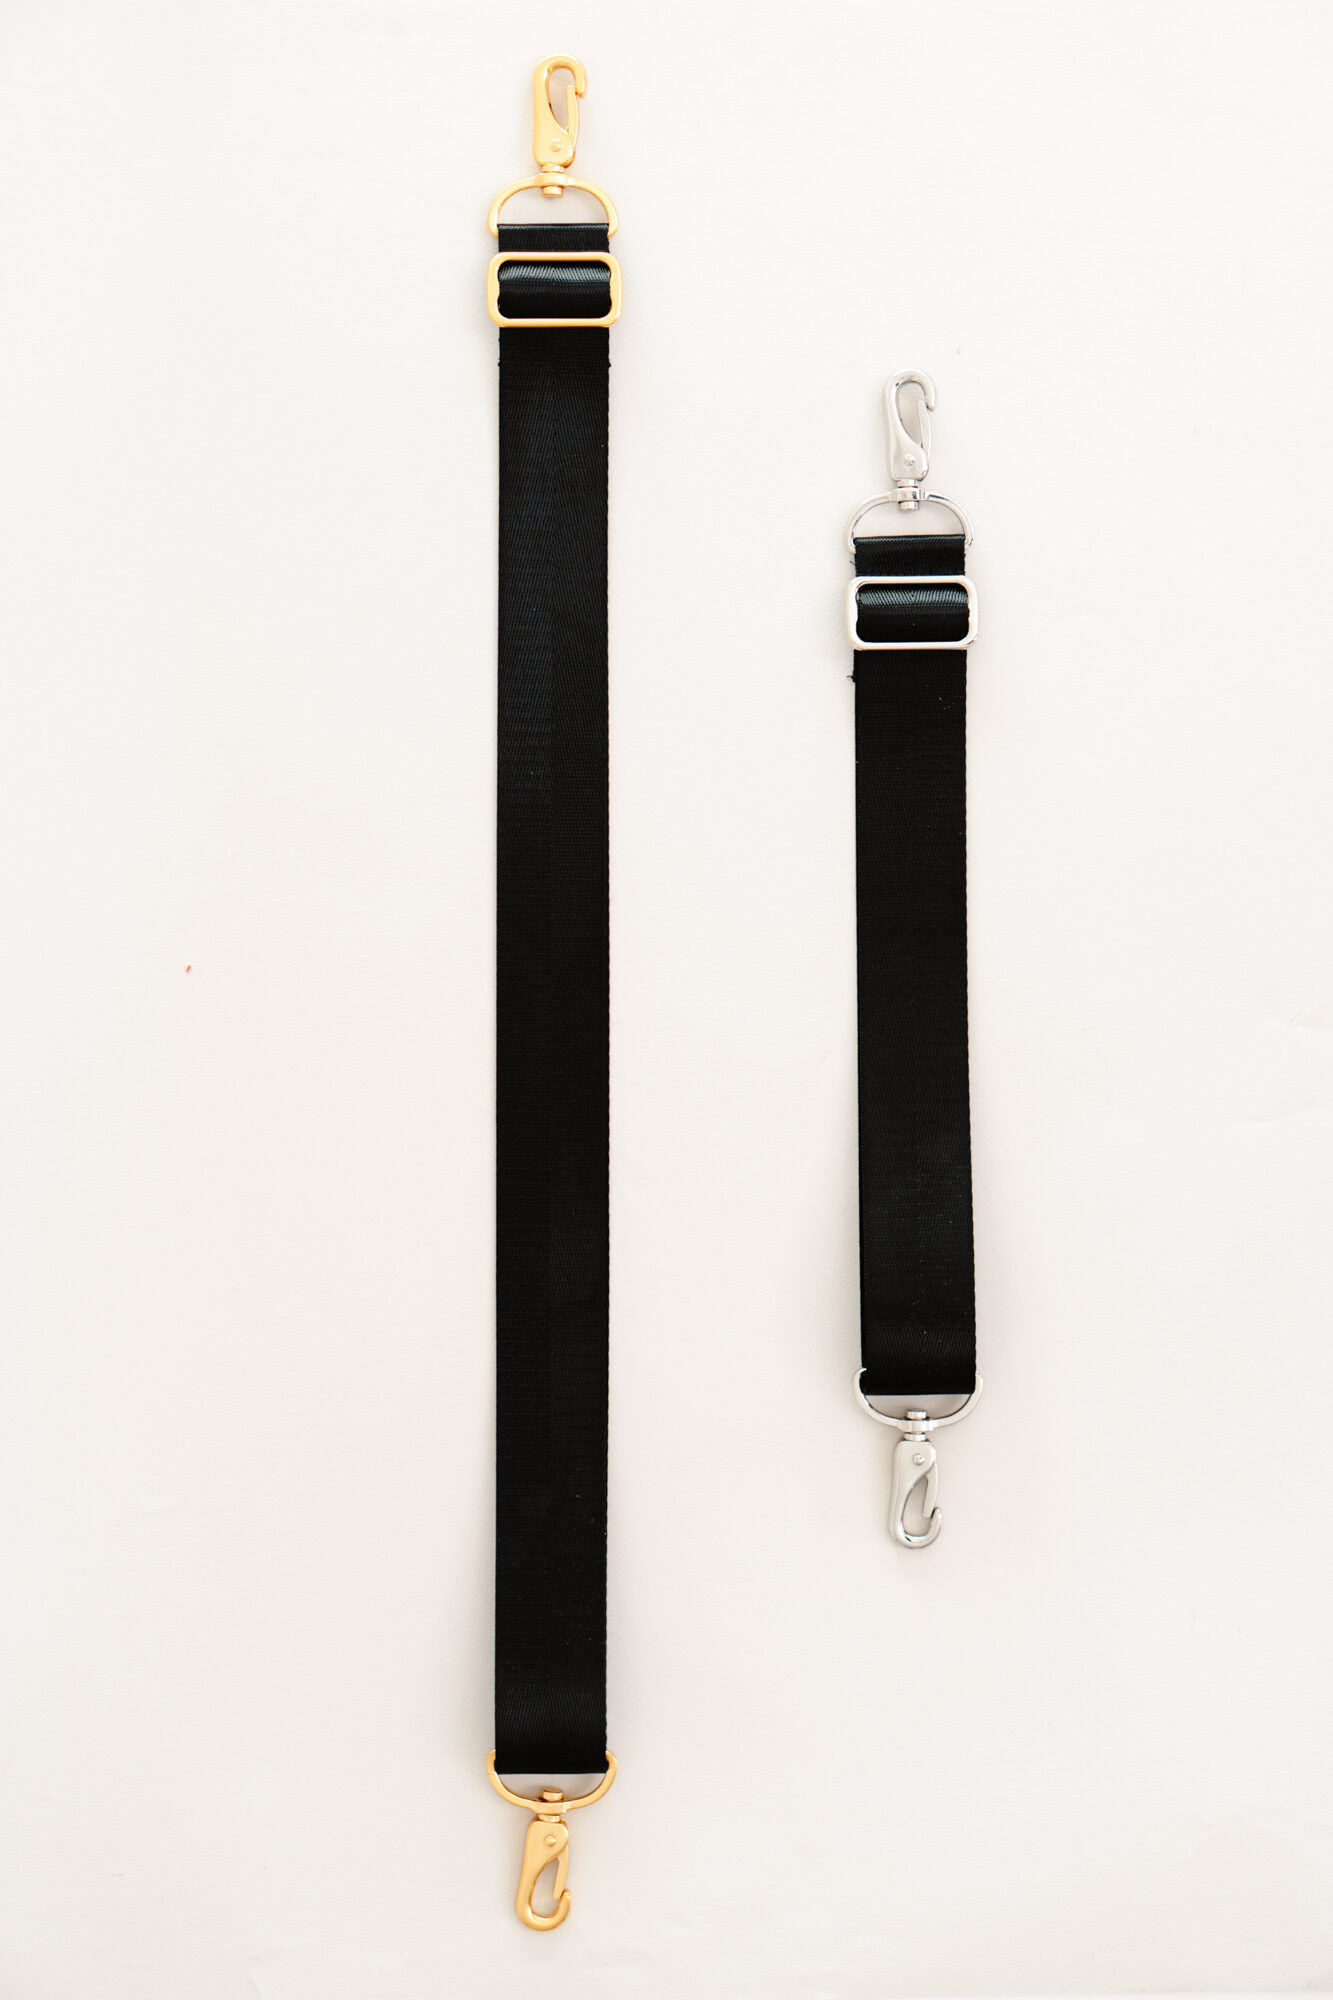 Interchangeable strap for handbags in silver golf black